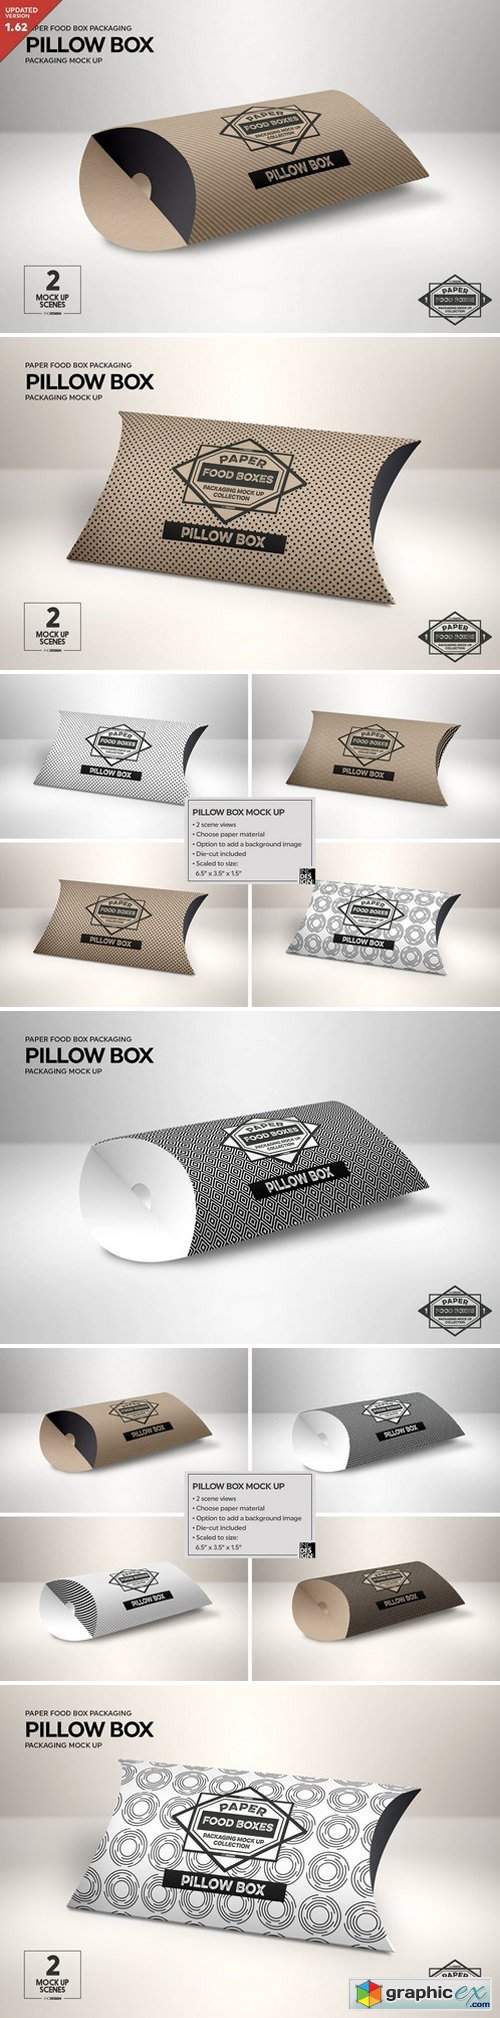 Pillow Box Packaging Mockup